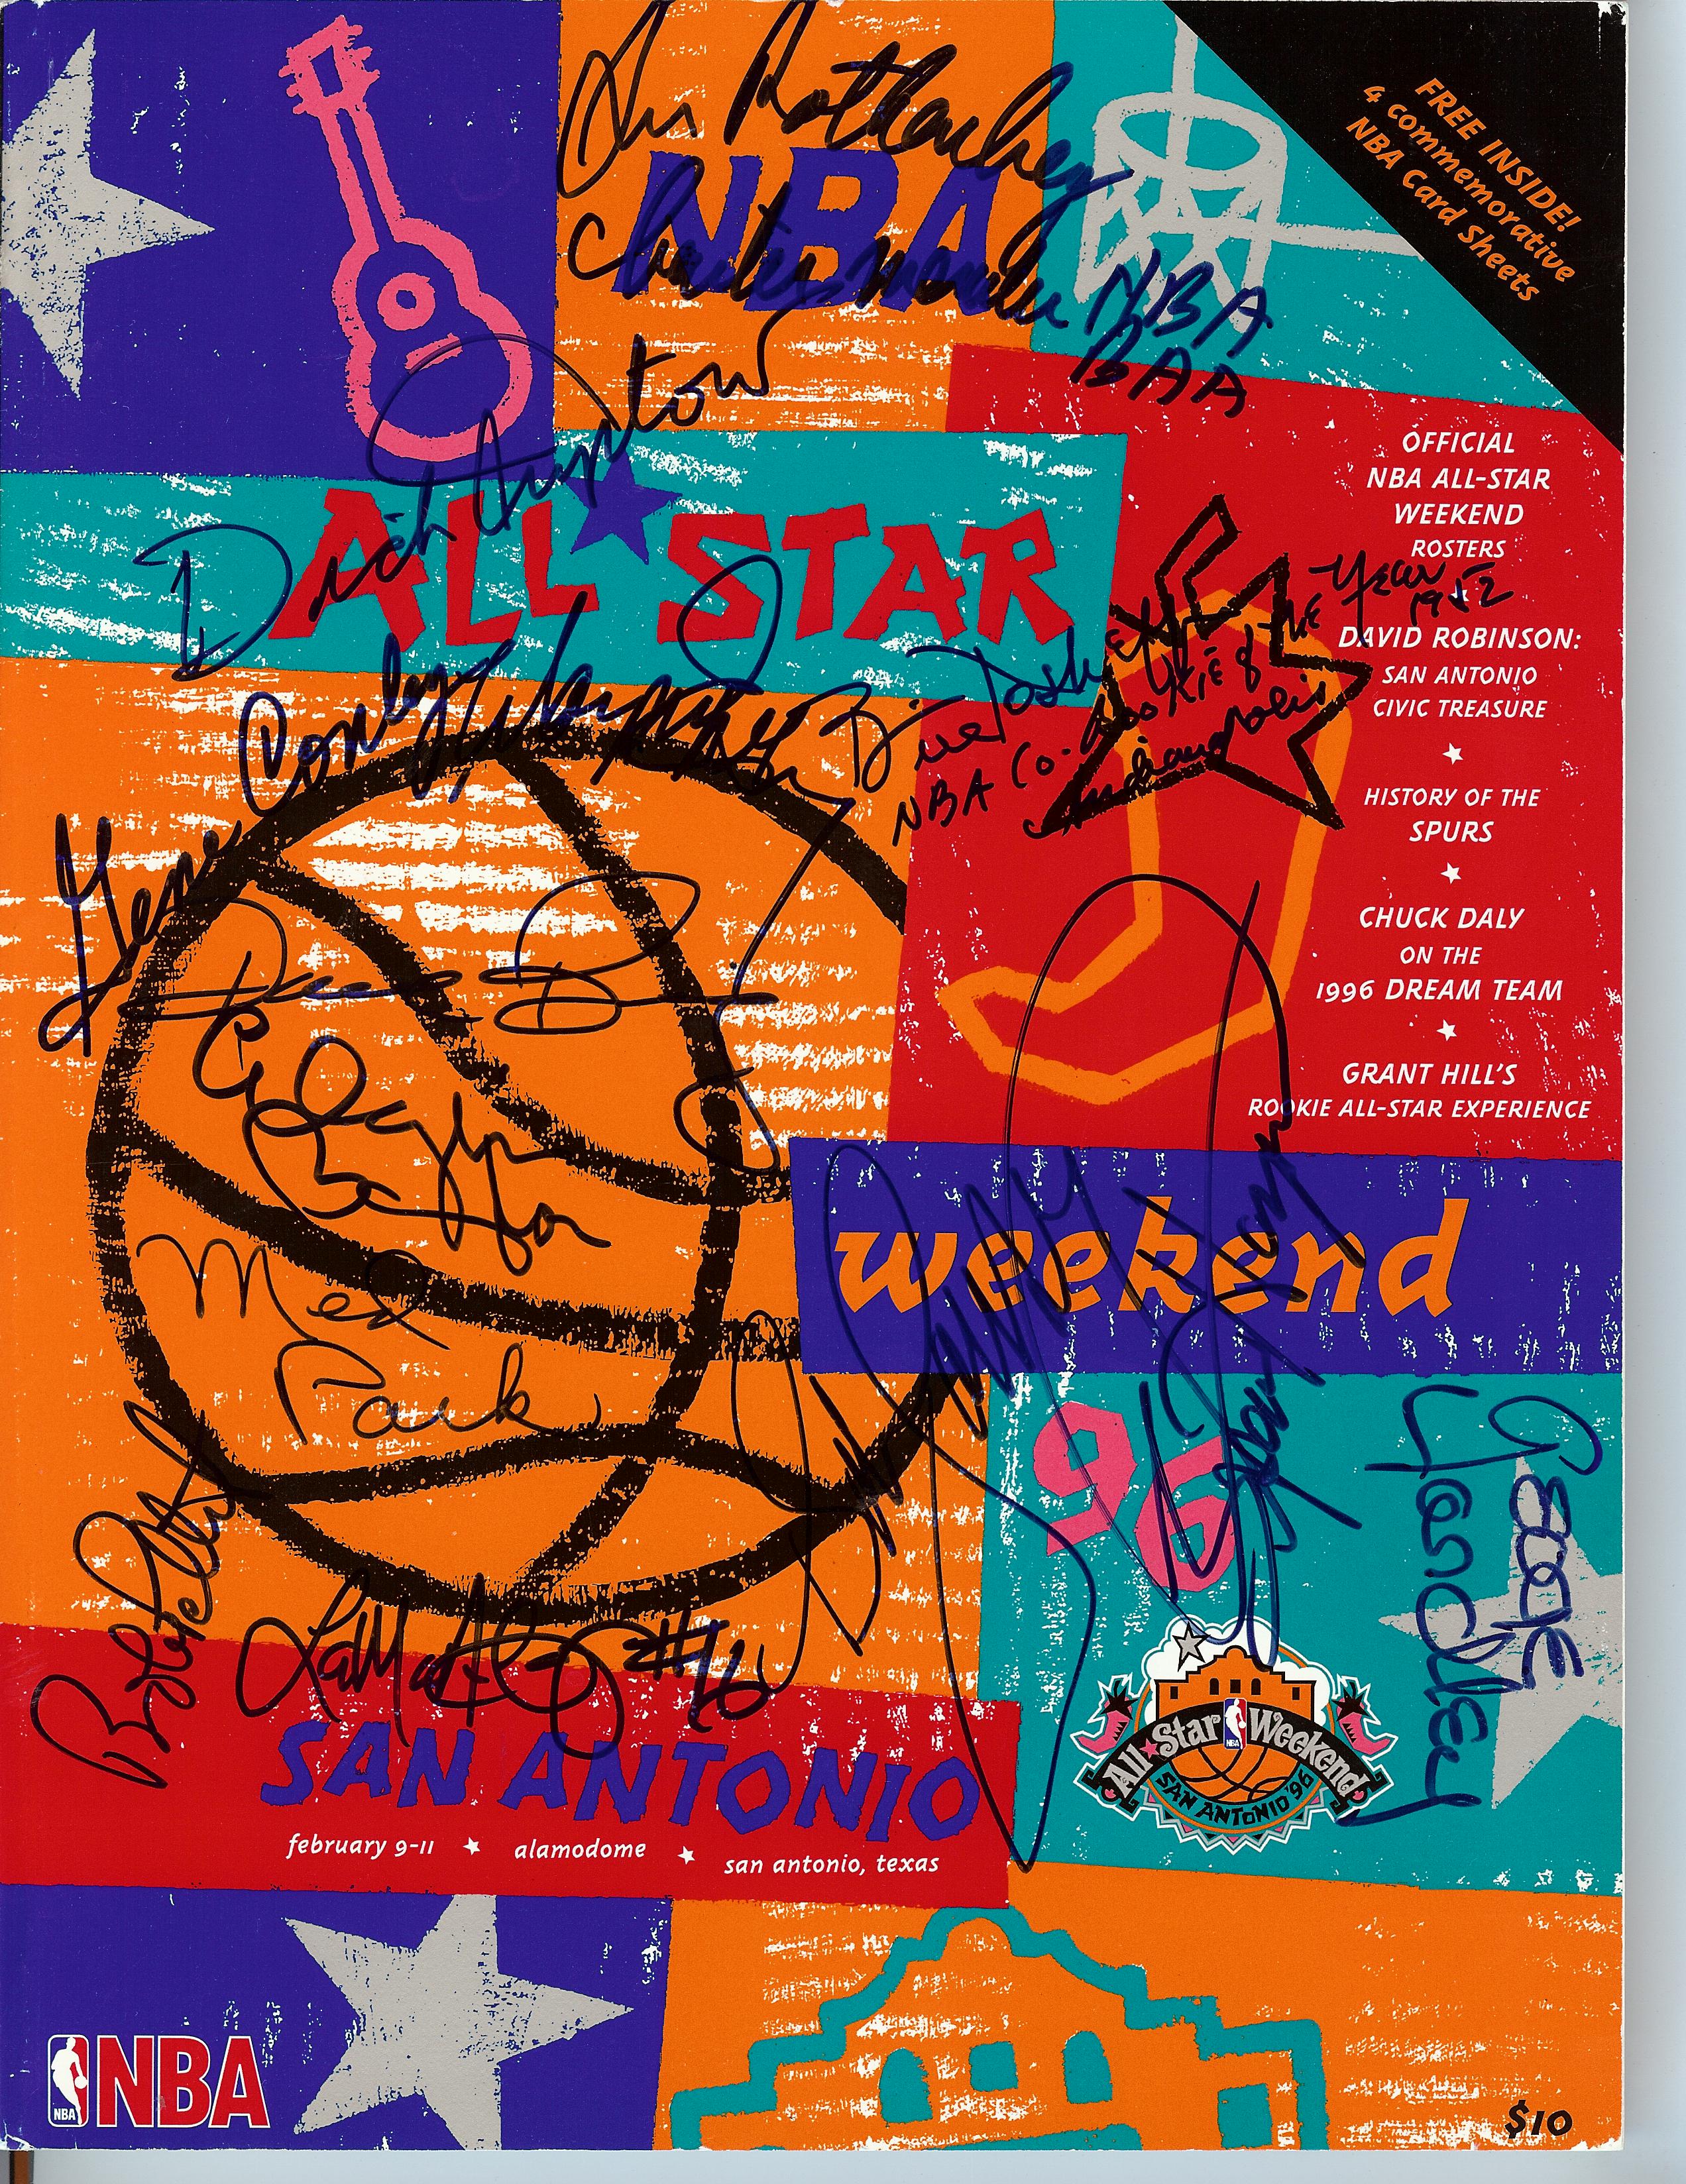 Michael Jordan - 1996 NBA All-Star Game Highlights (MVP) 